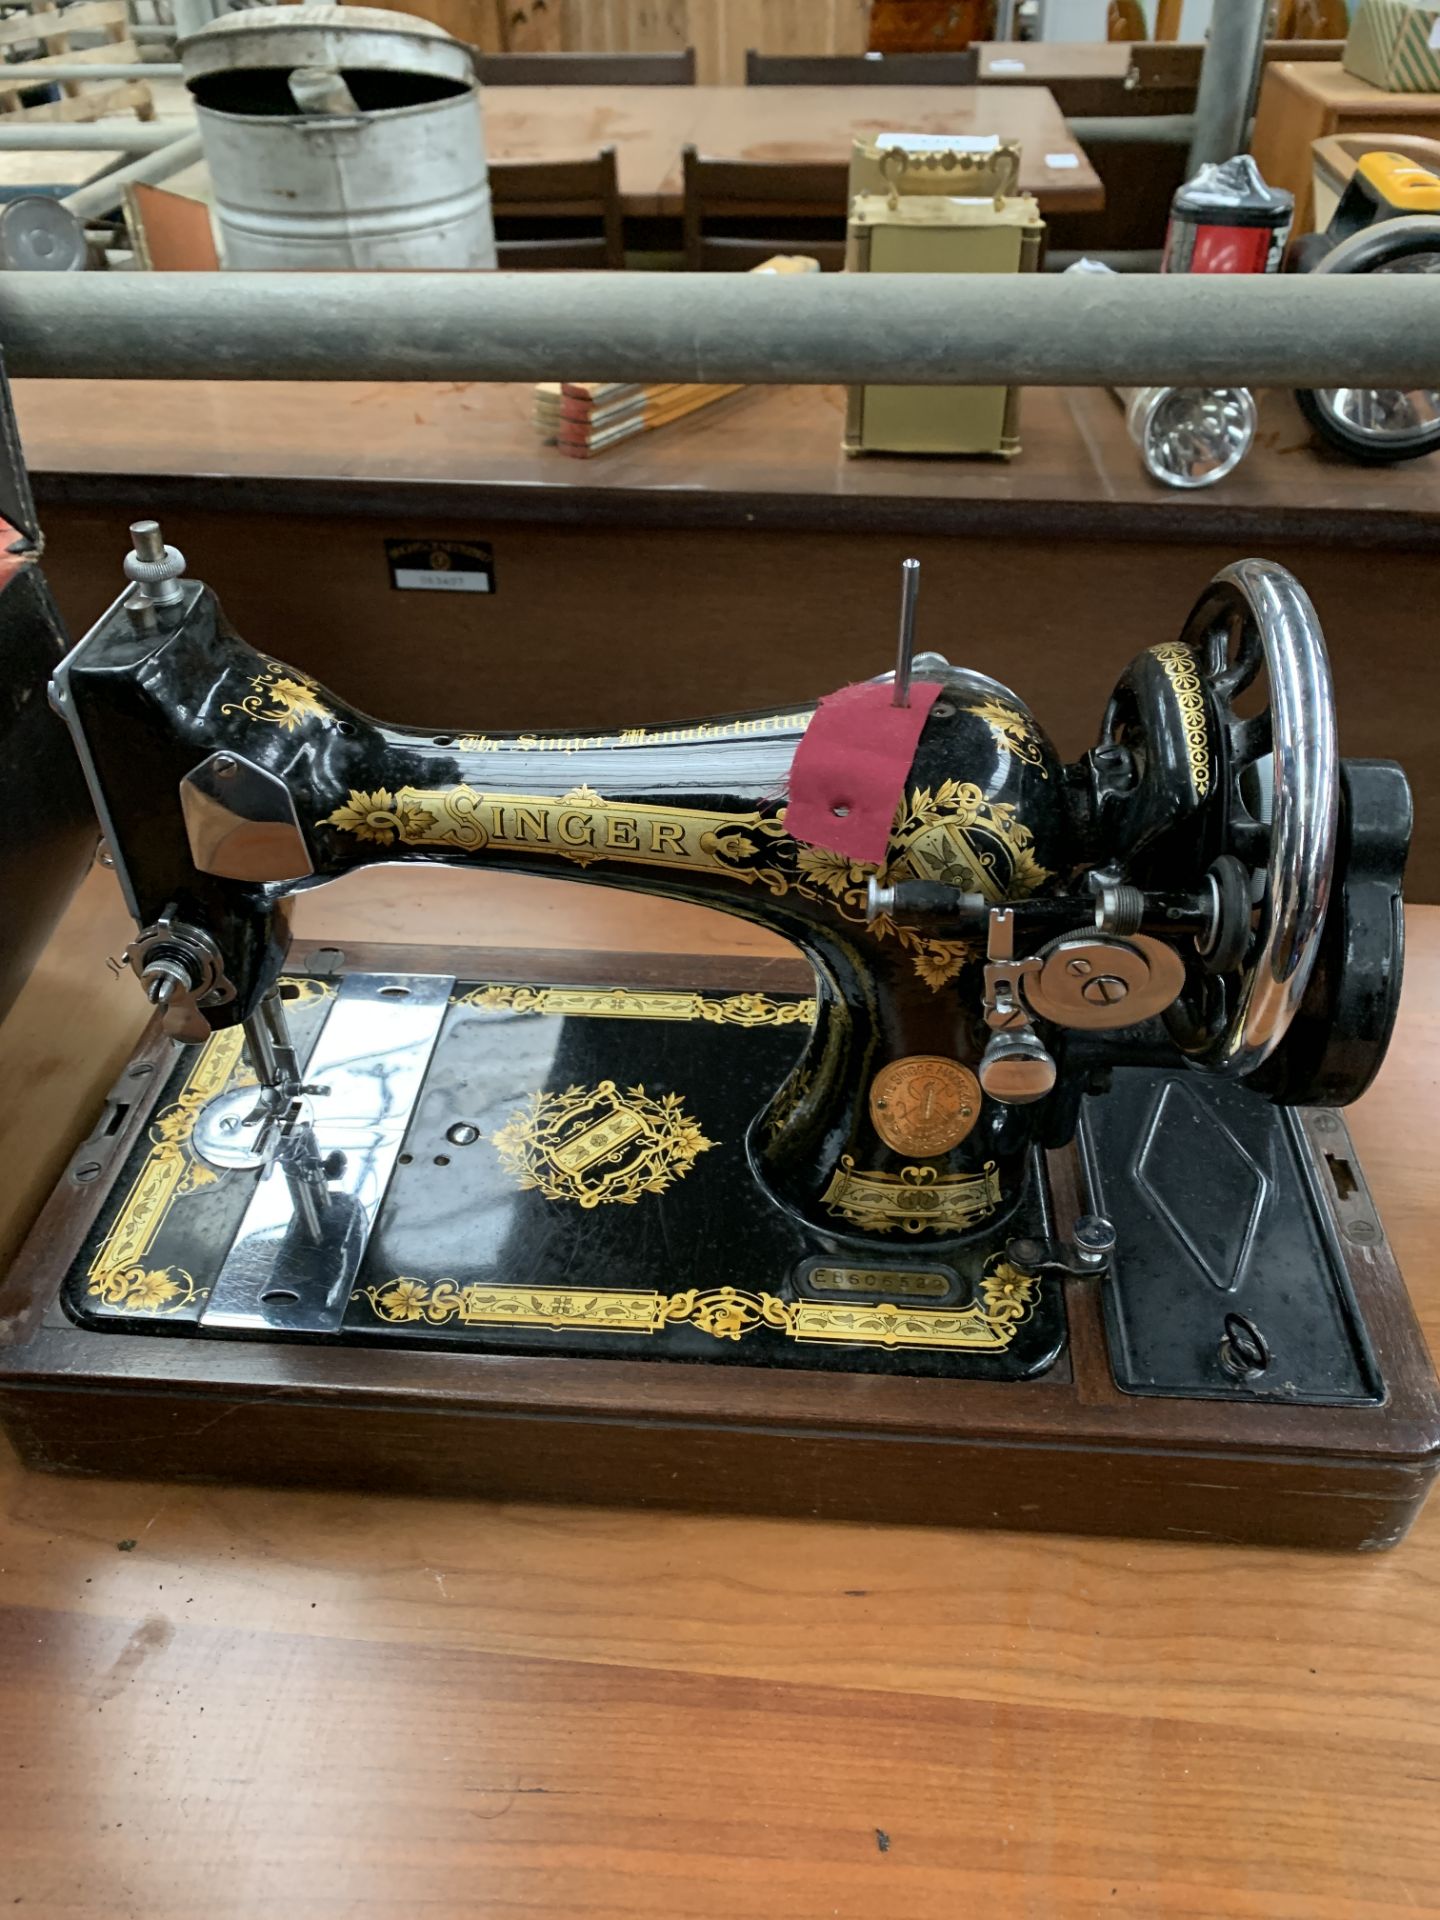 Manual Singer sewing machine in case